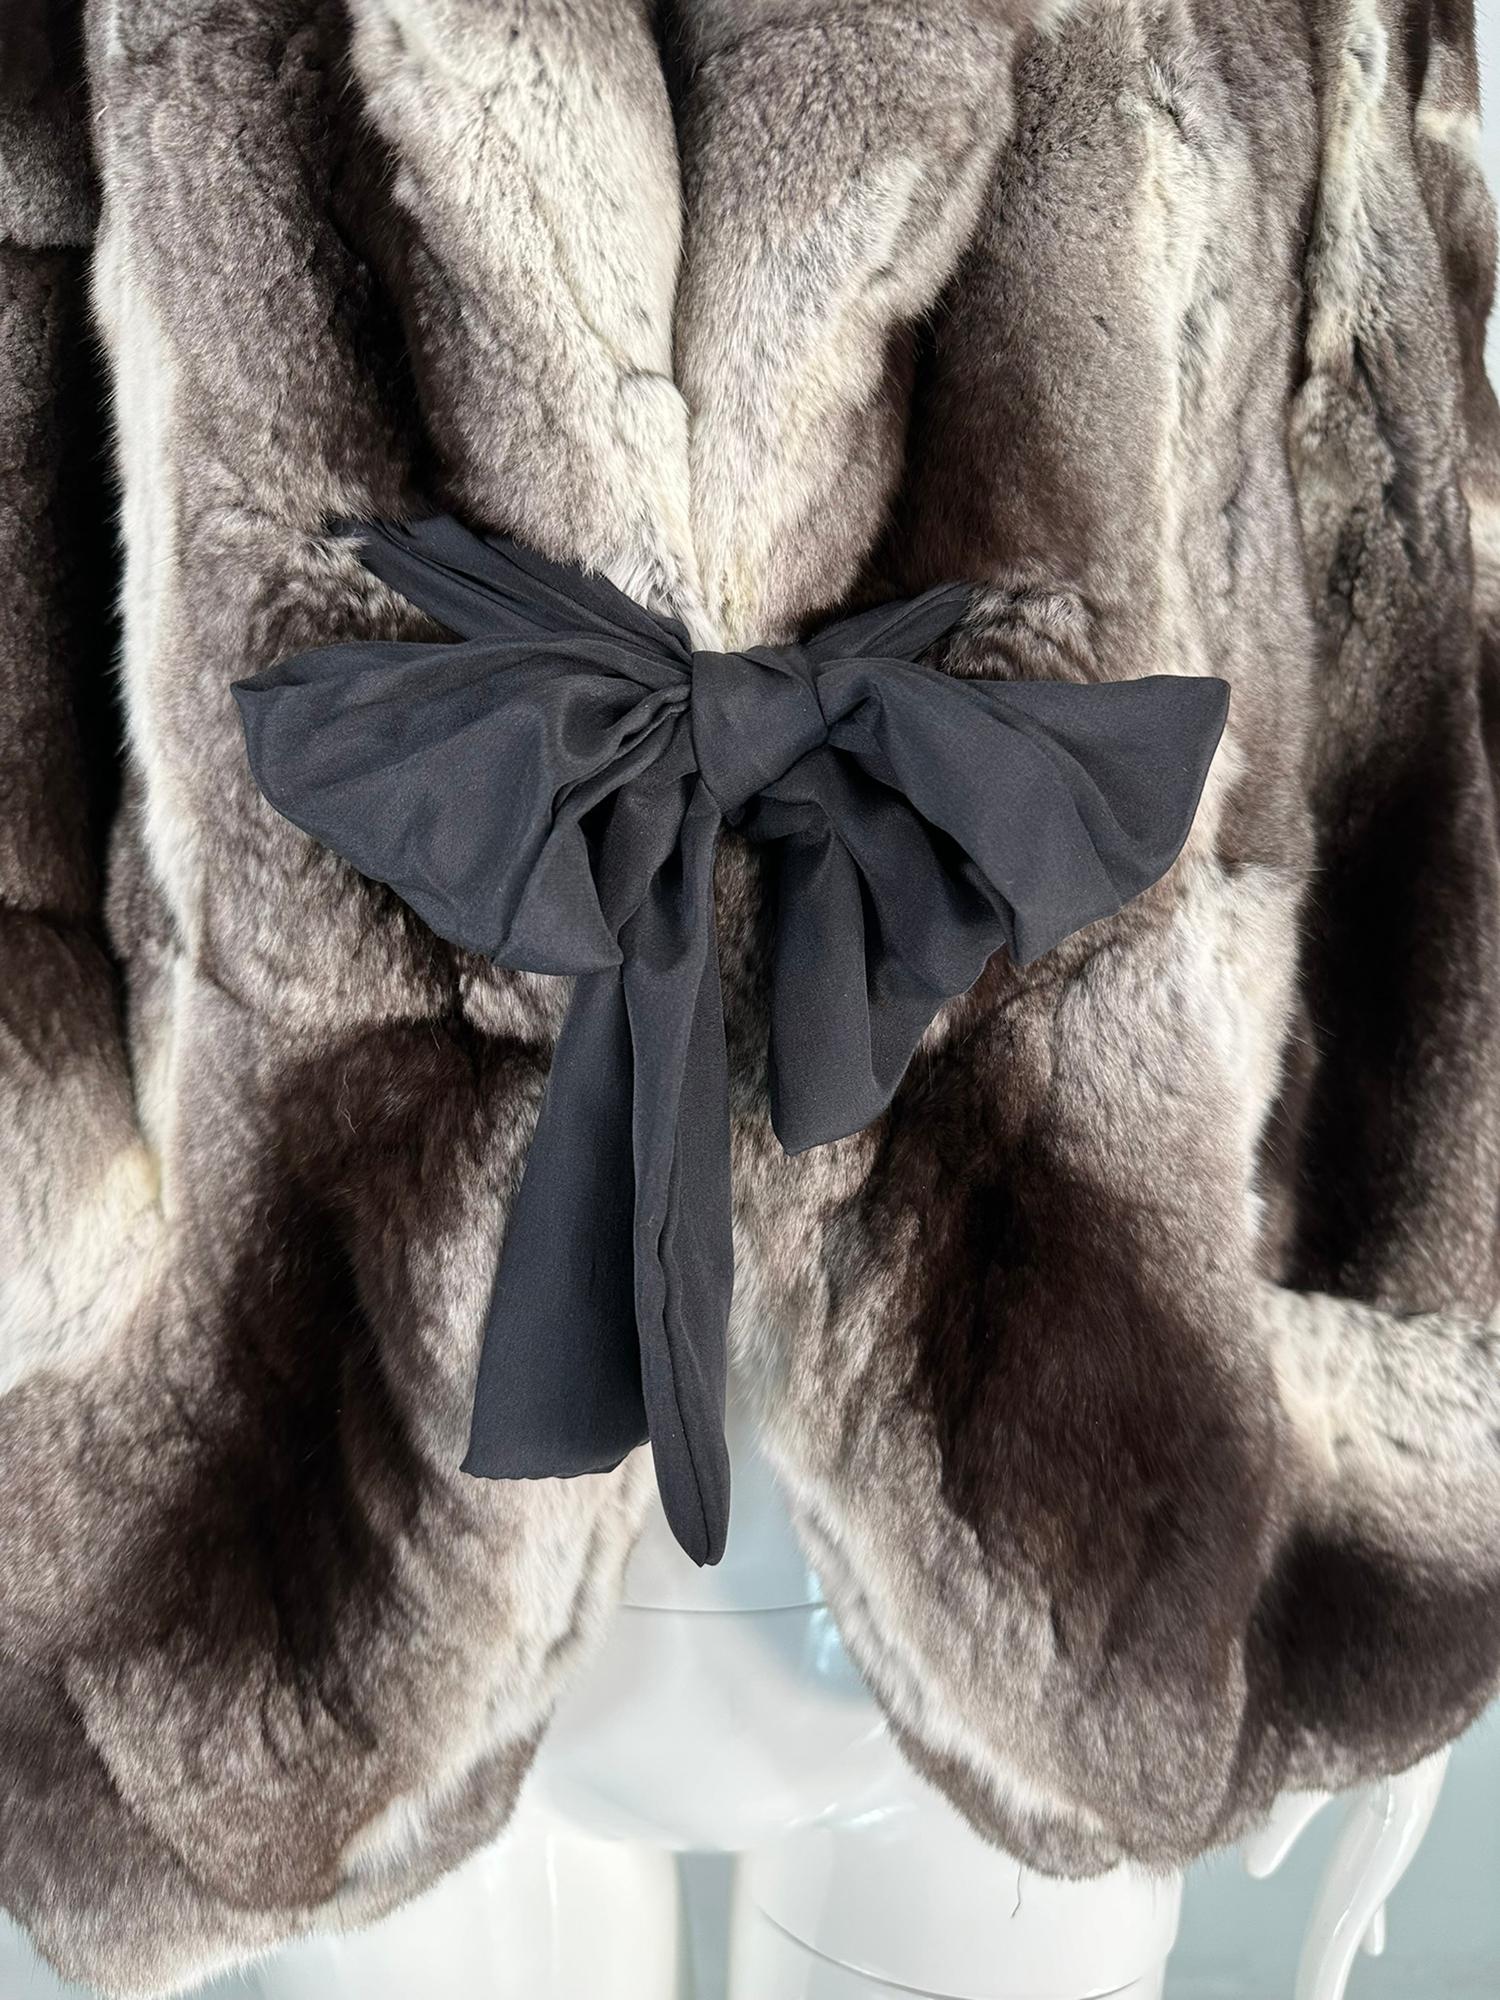 Dennis Basso Chinchilla Fur Jacket in Light & Dark Grey with Cream 2013 S-M 2013 For Sale 9